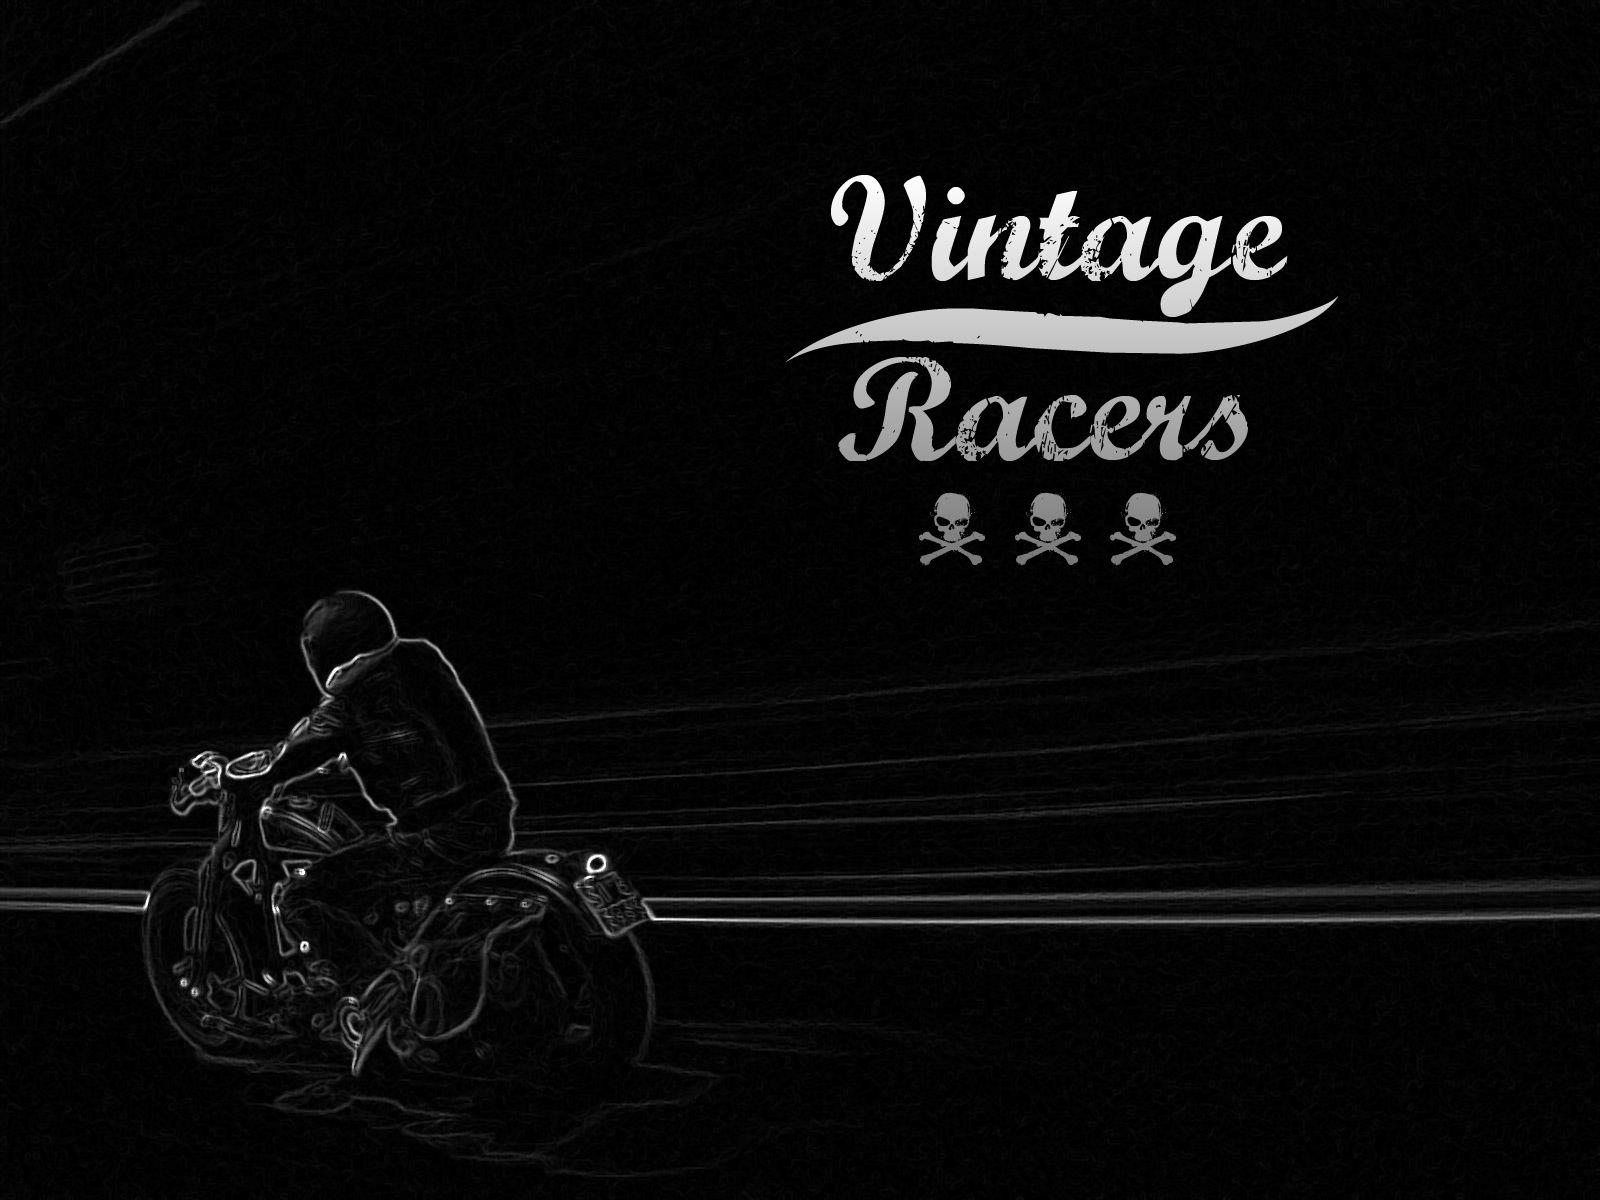 Cafe Racer Wallpaper Hd. HD pics yamaha cafe racer wallpaper hq